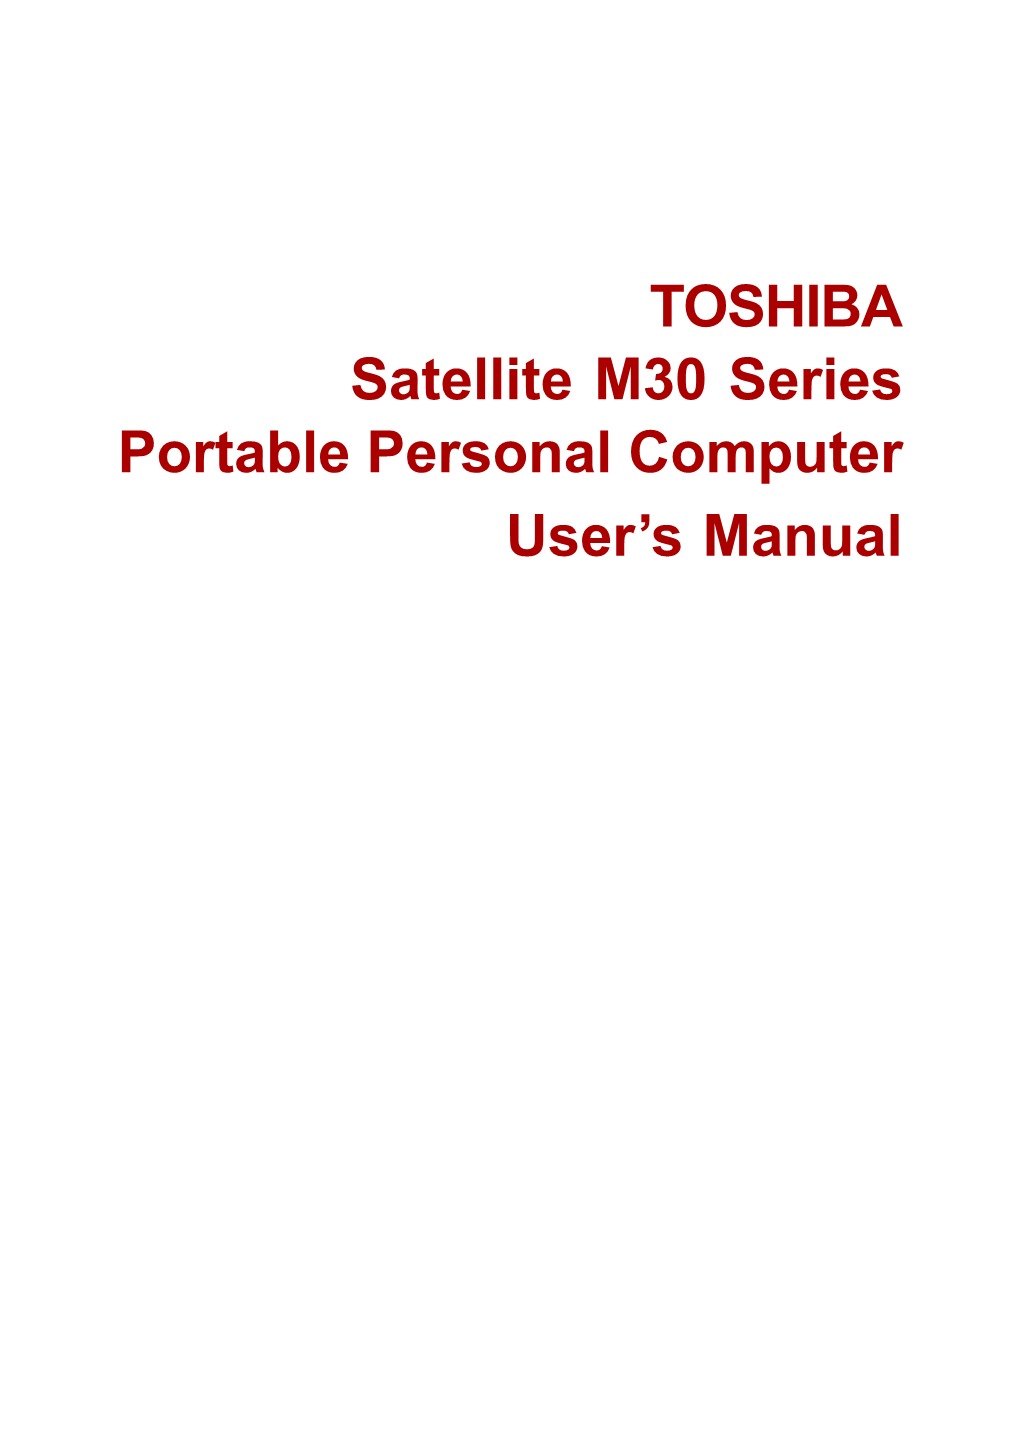 TOSHIBA Satellite M30 Series Portable Personal Computer User's